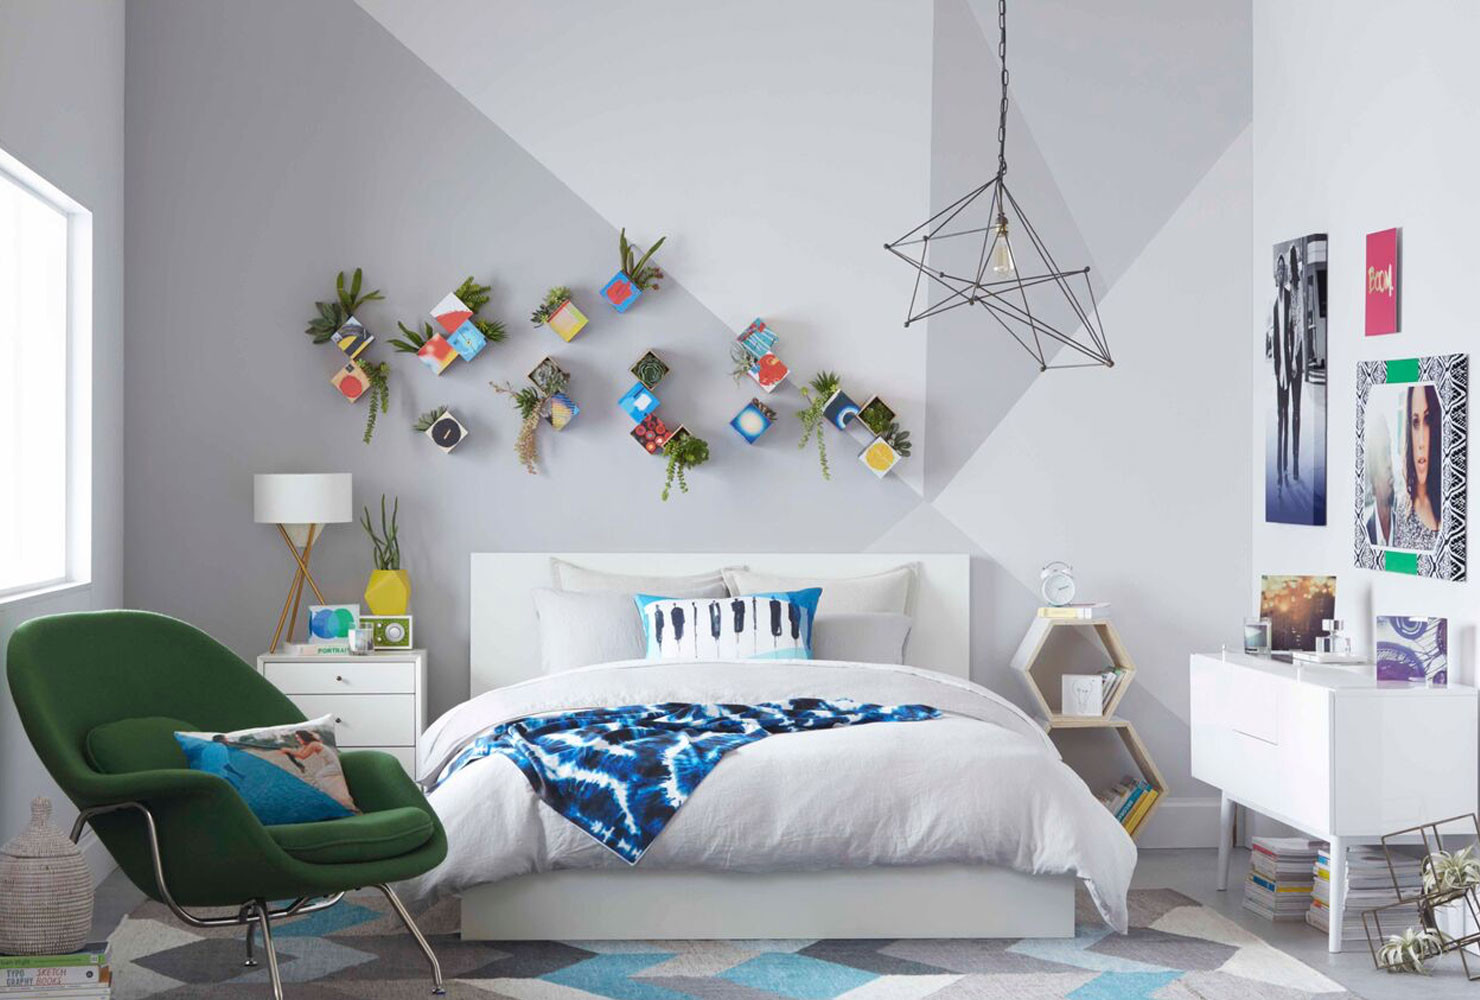 Best ideas about DIY Bedroom Decor Ideas
. Save or Pin 24 DIY Bedroom Decor Ideas To Inspire You With Printables Now.